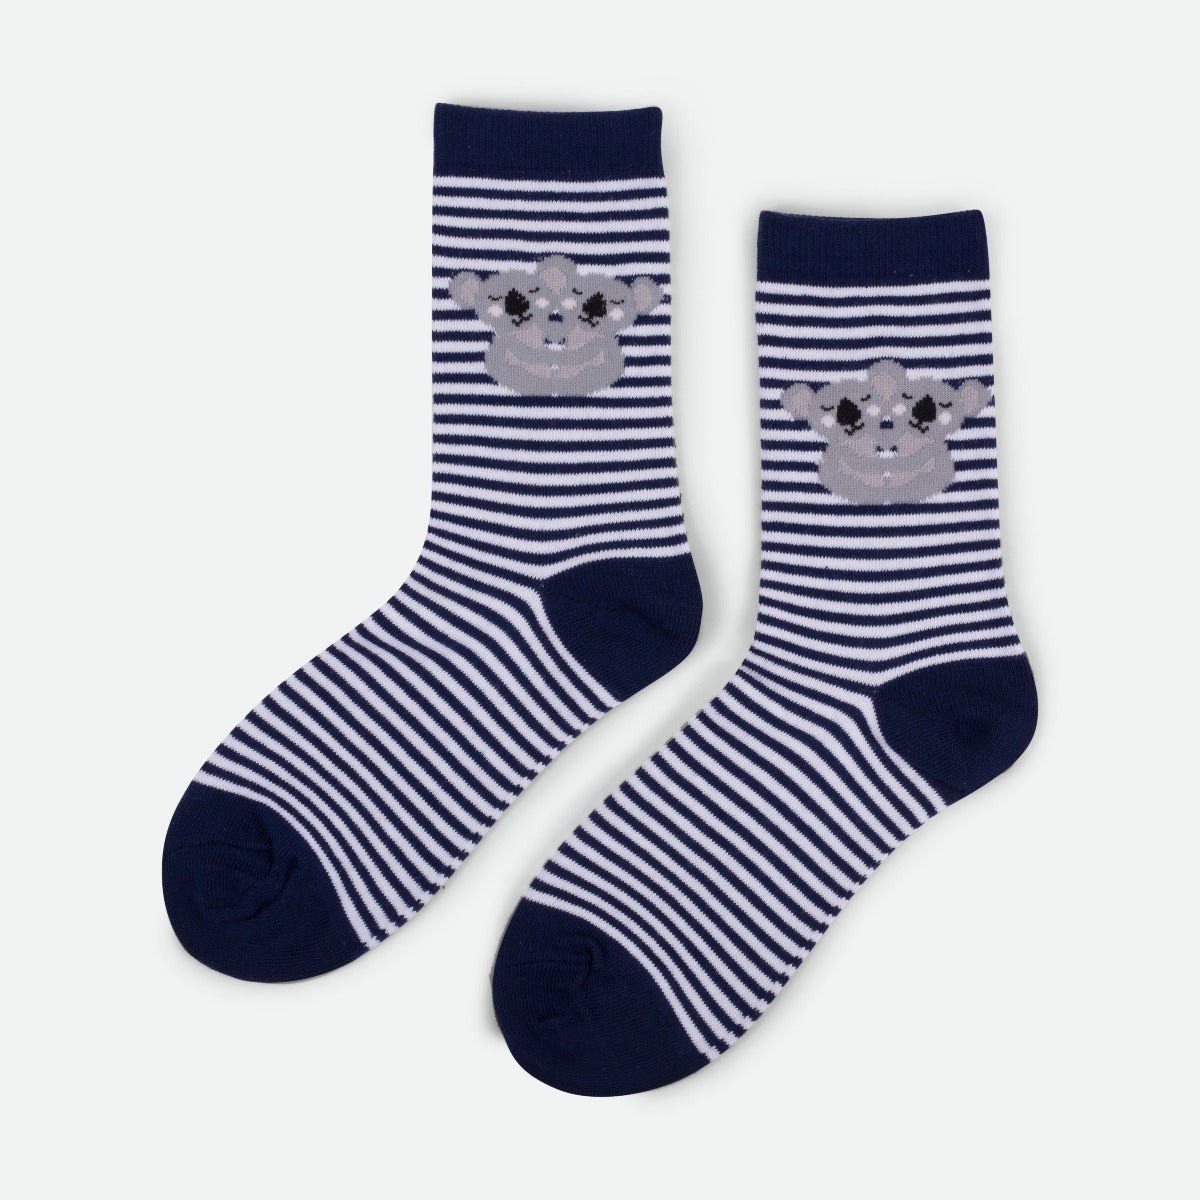 Navy blue socks with white stripes and koala print